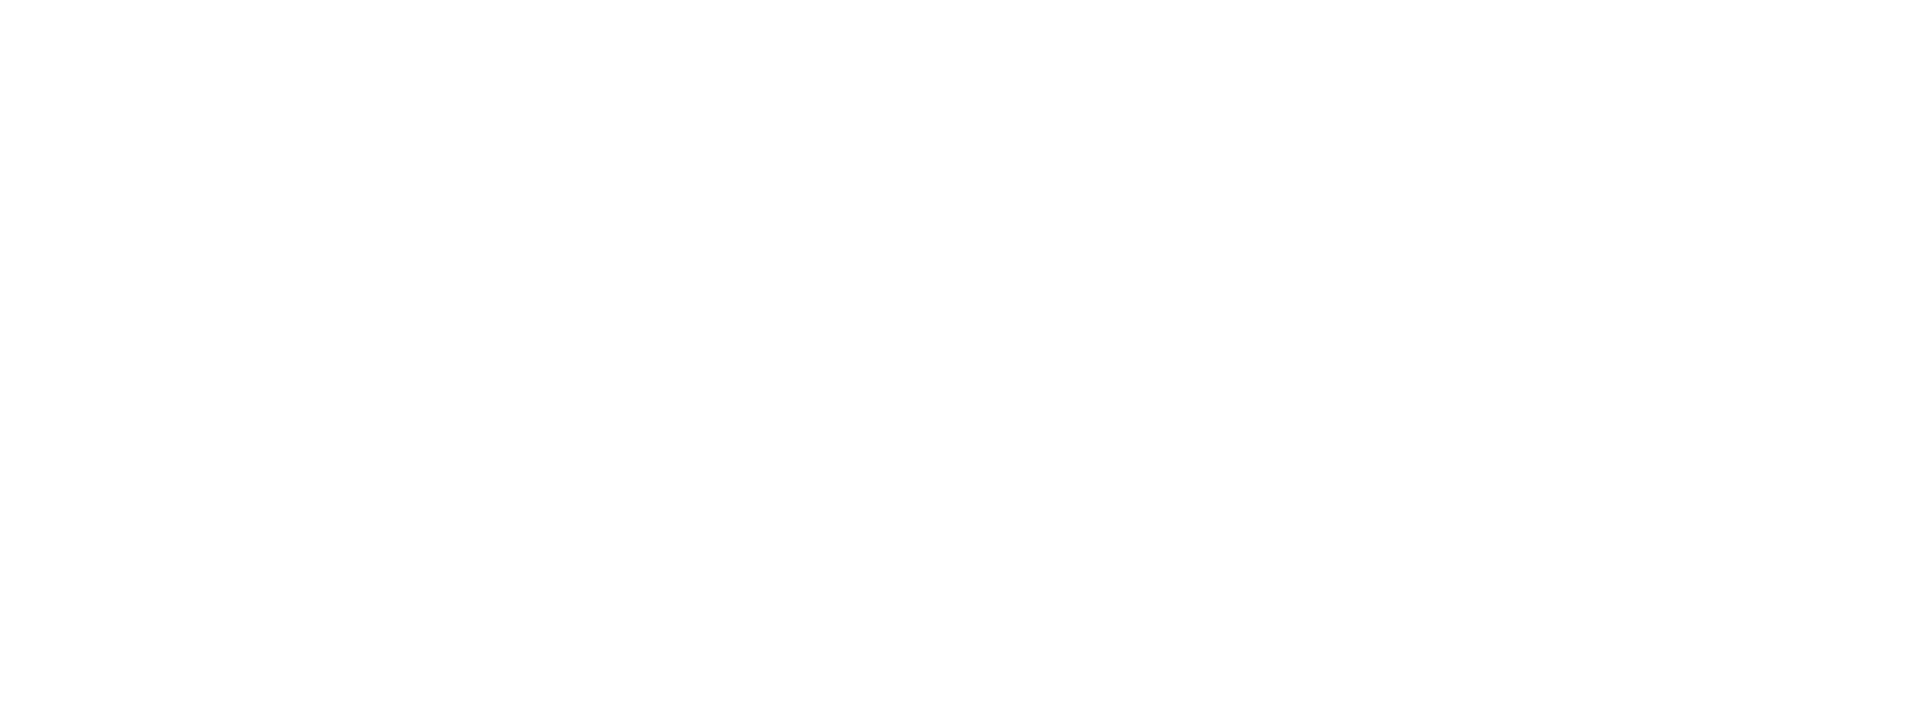 Pfefferle Management logo - footer